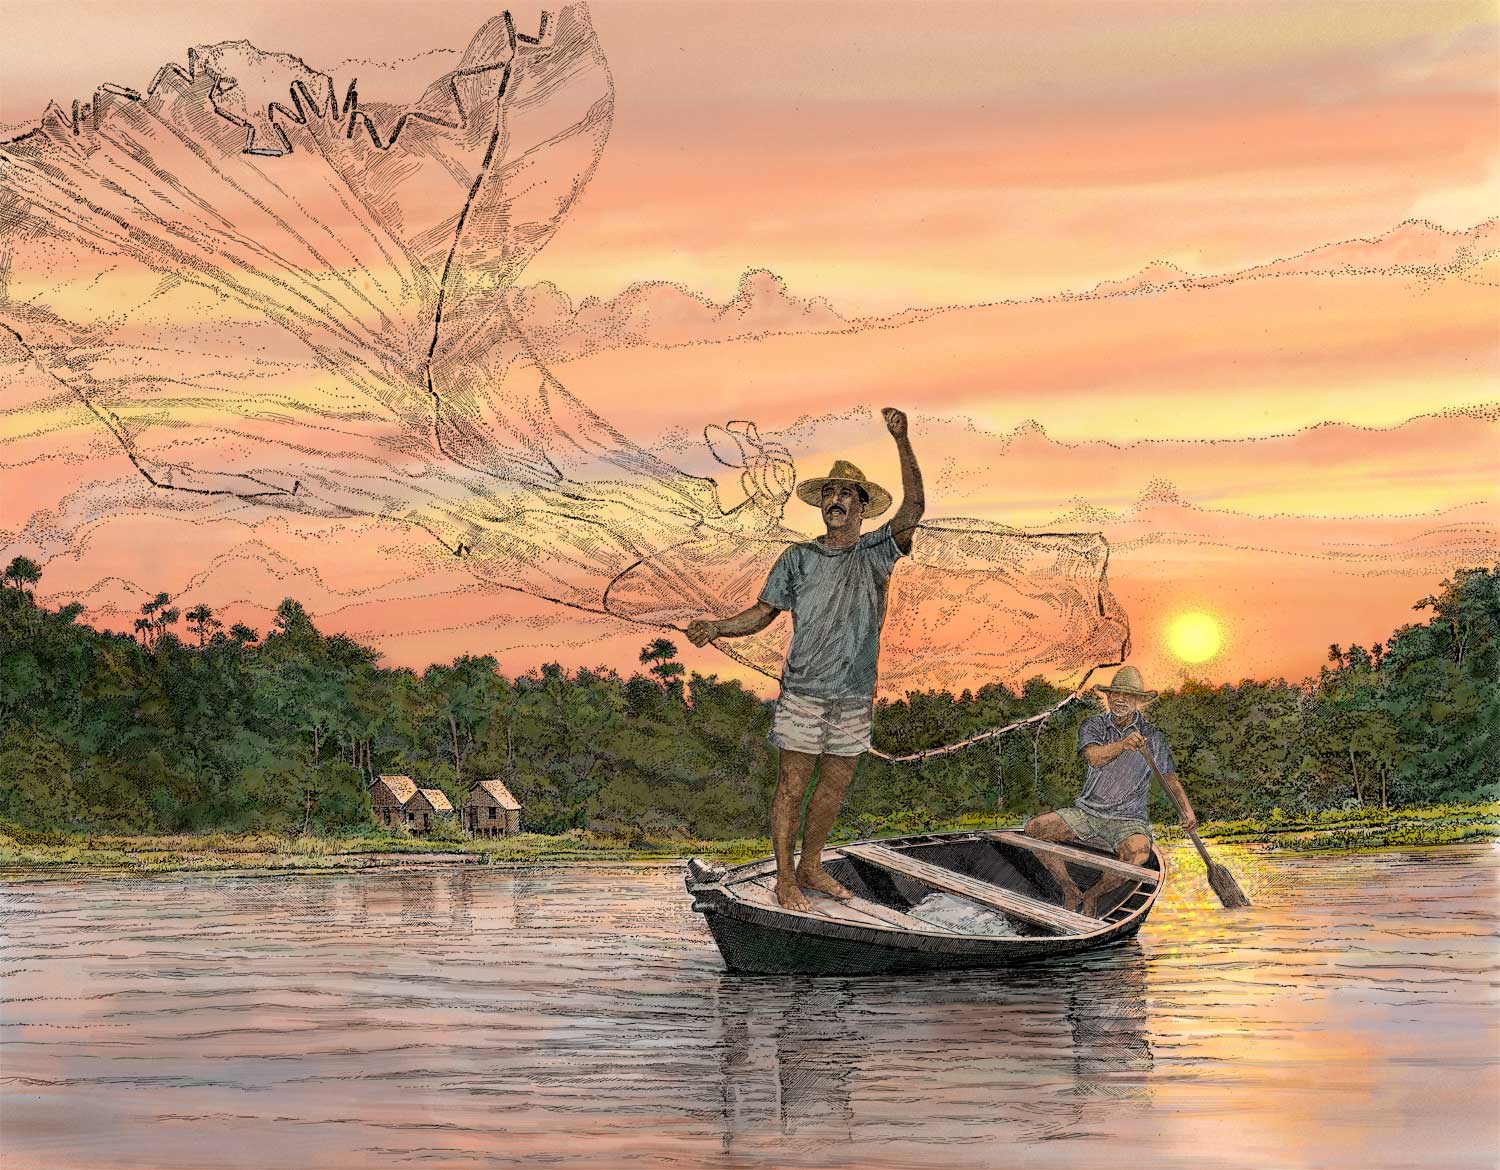 Two Fishermen fishing in the Amazon River